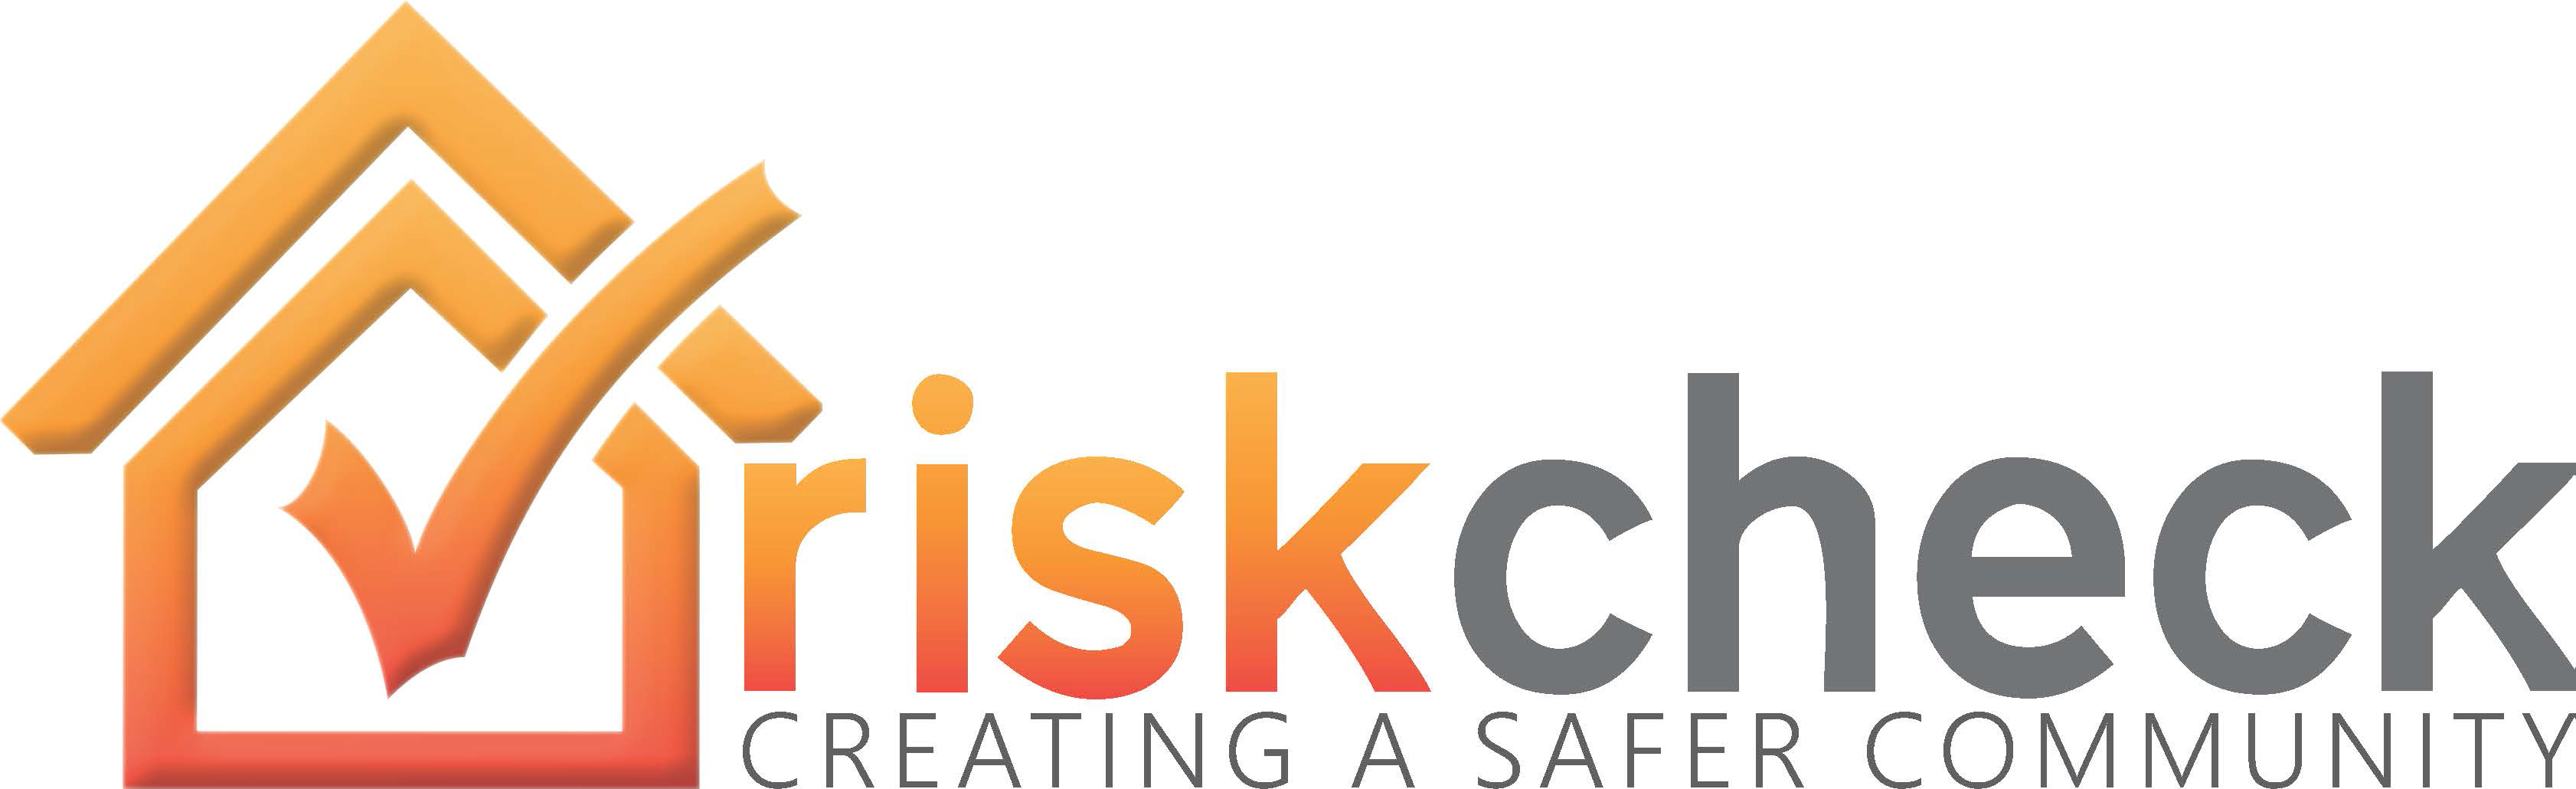 Risk Check Logo.png